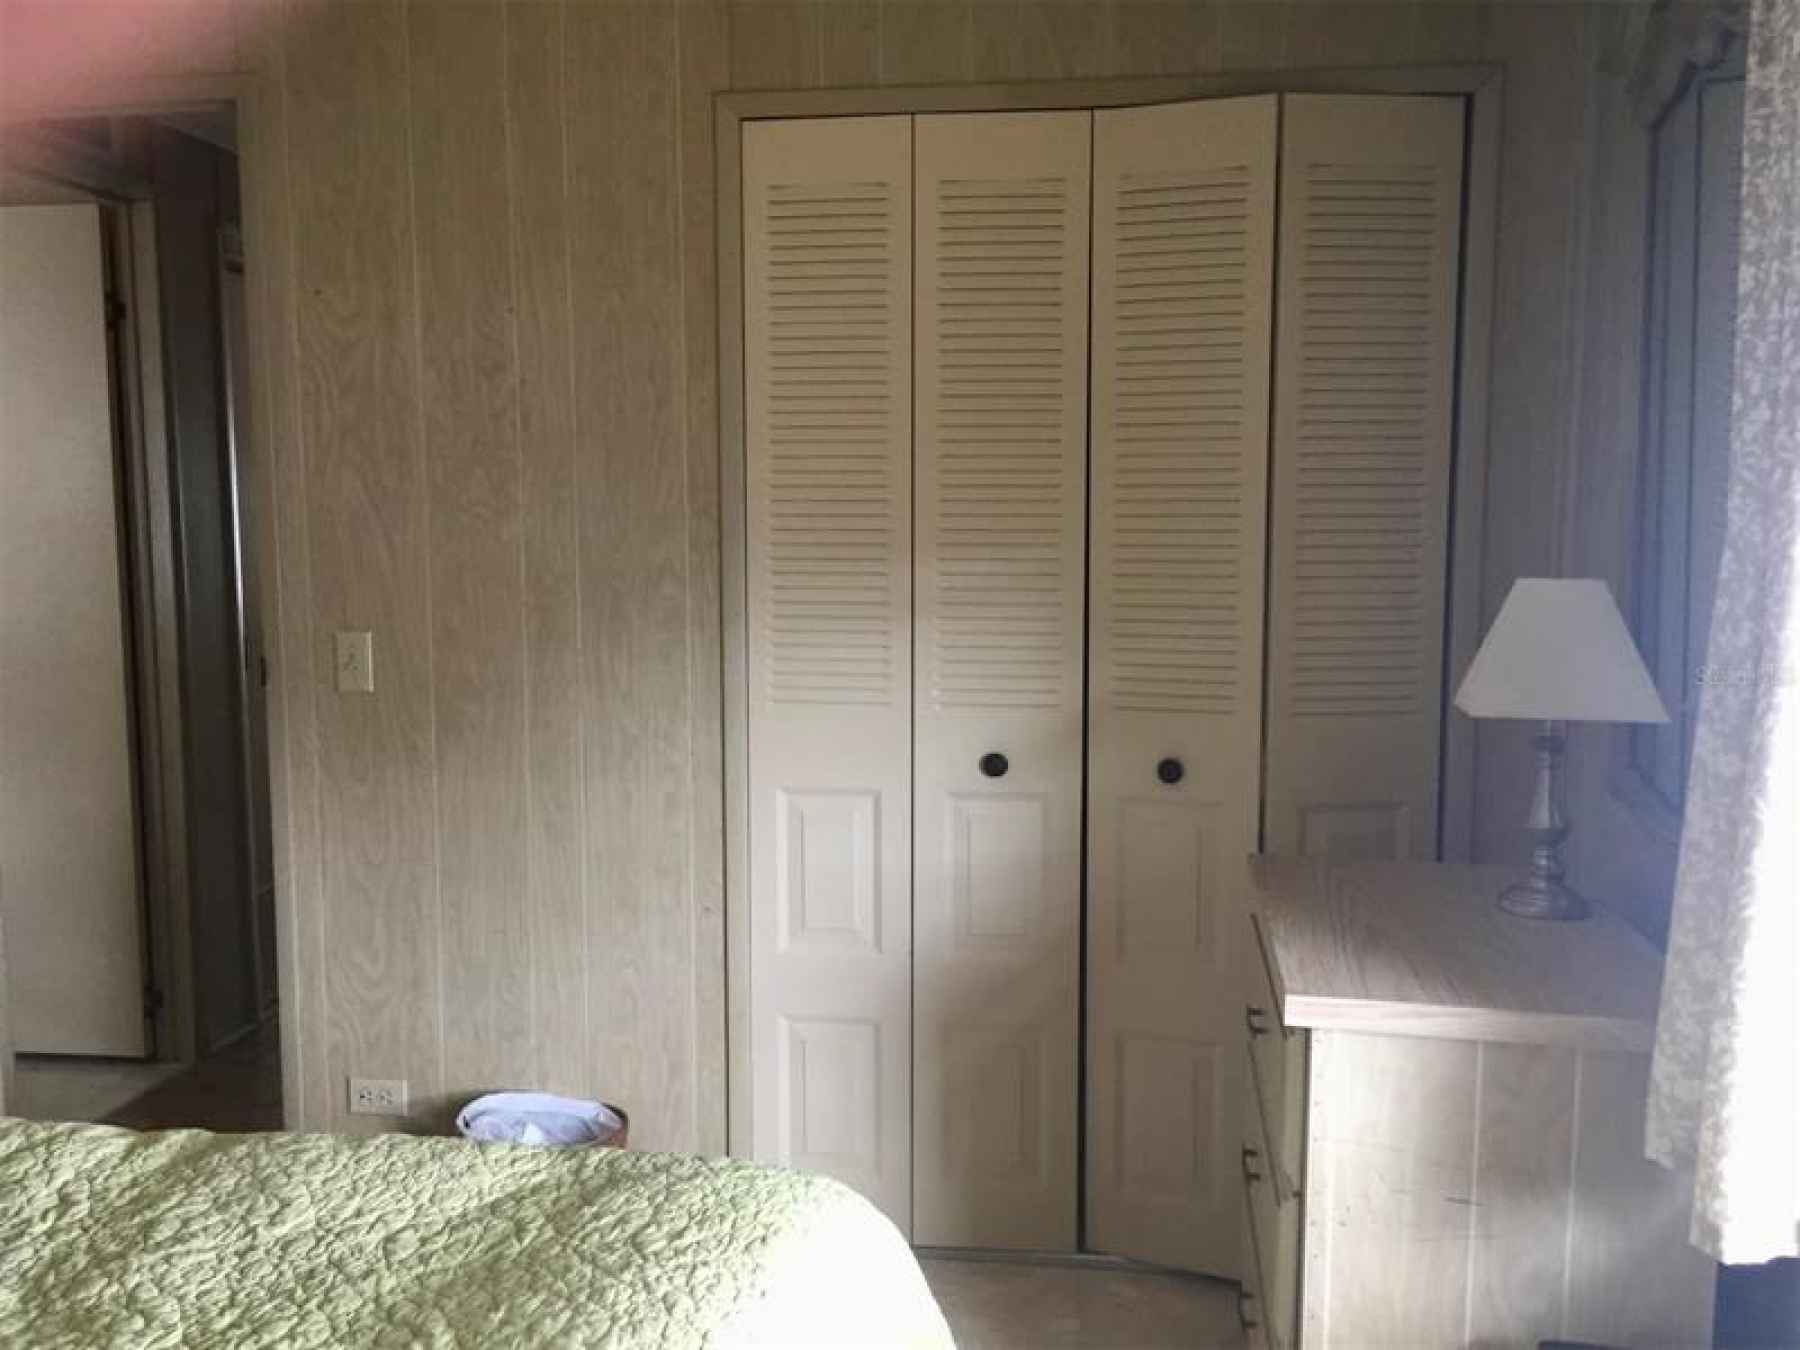 Other view of guest bedroom showing double closet doors.